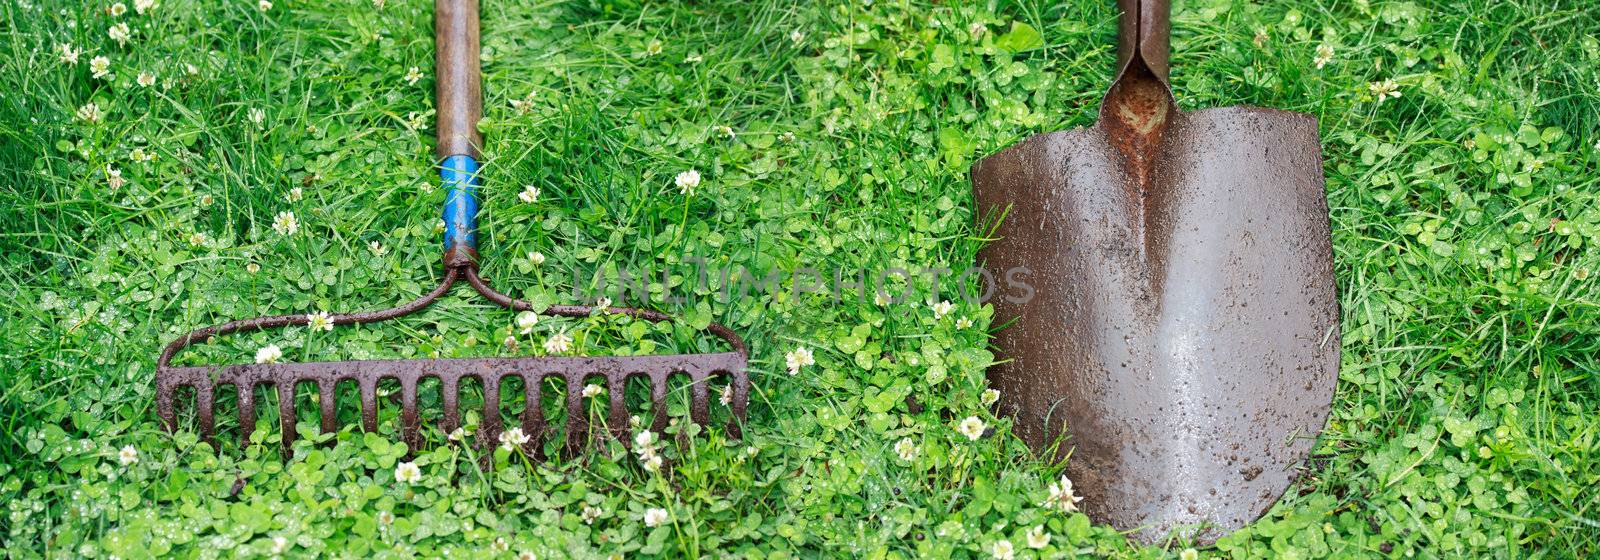 Metal Garden Rake and Shovel on top of Lawn